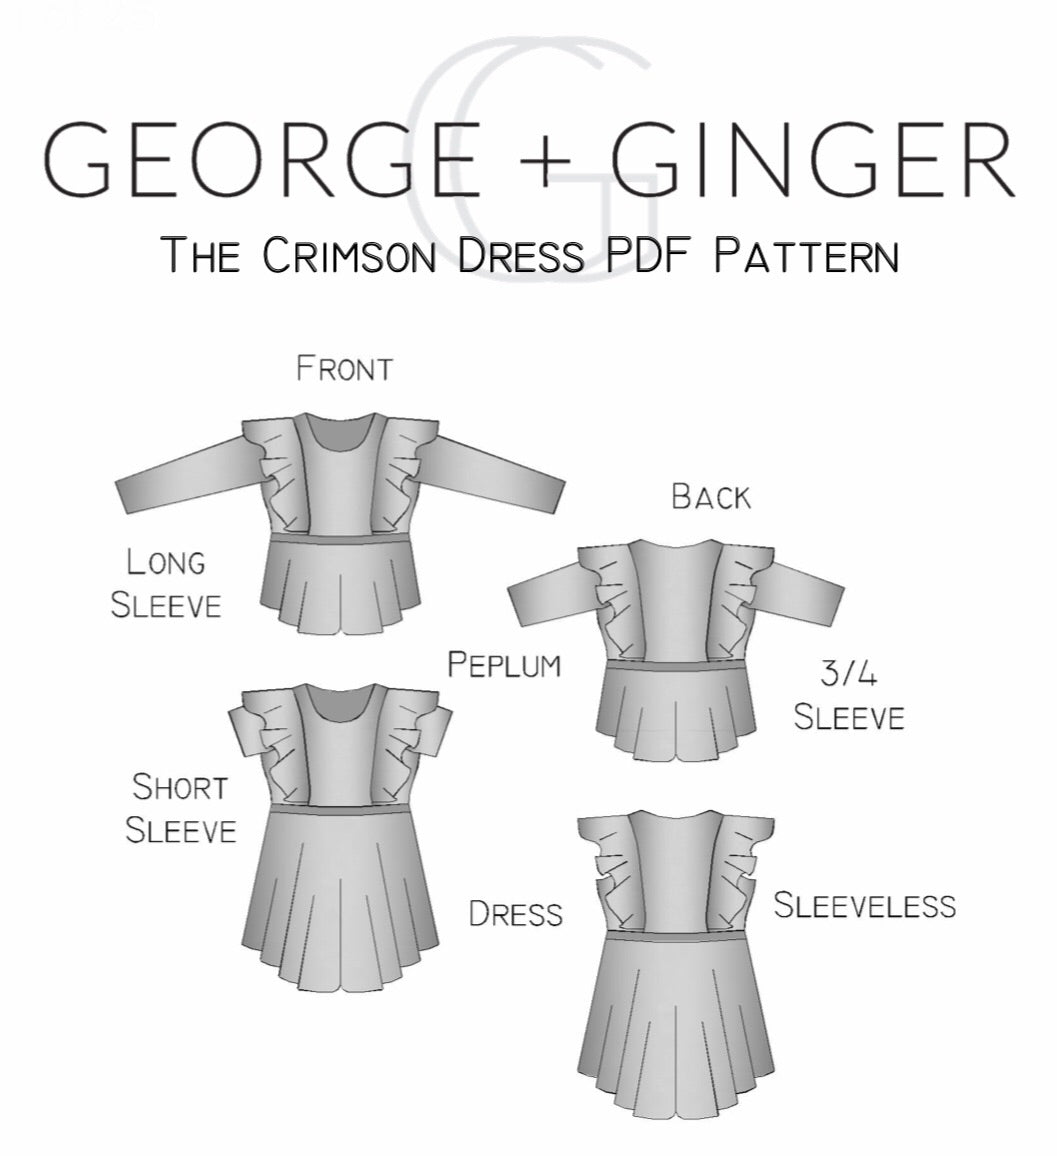 The Crimson Dress PDF Sewing Pattern